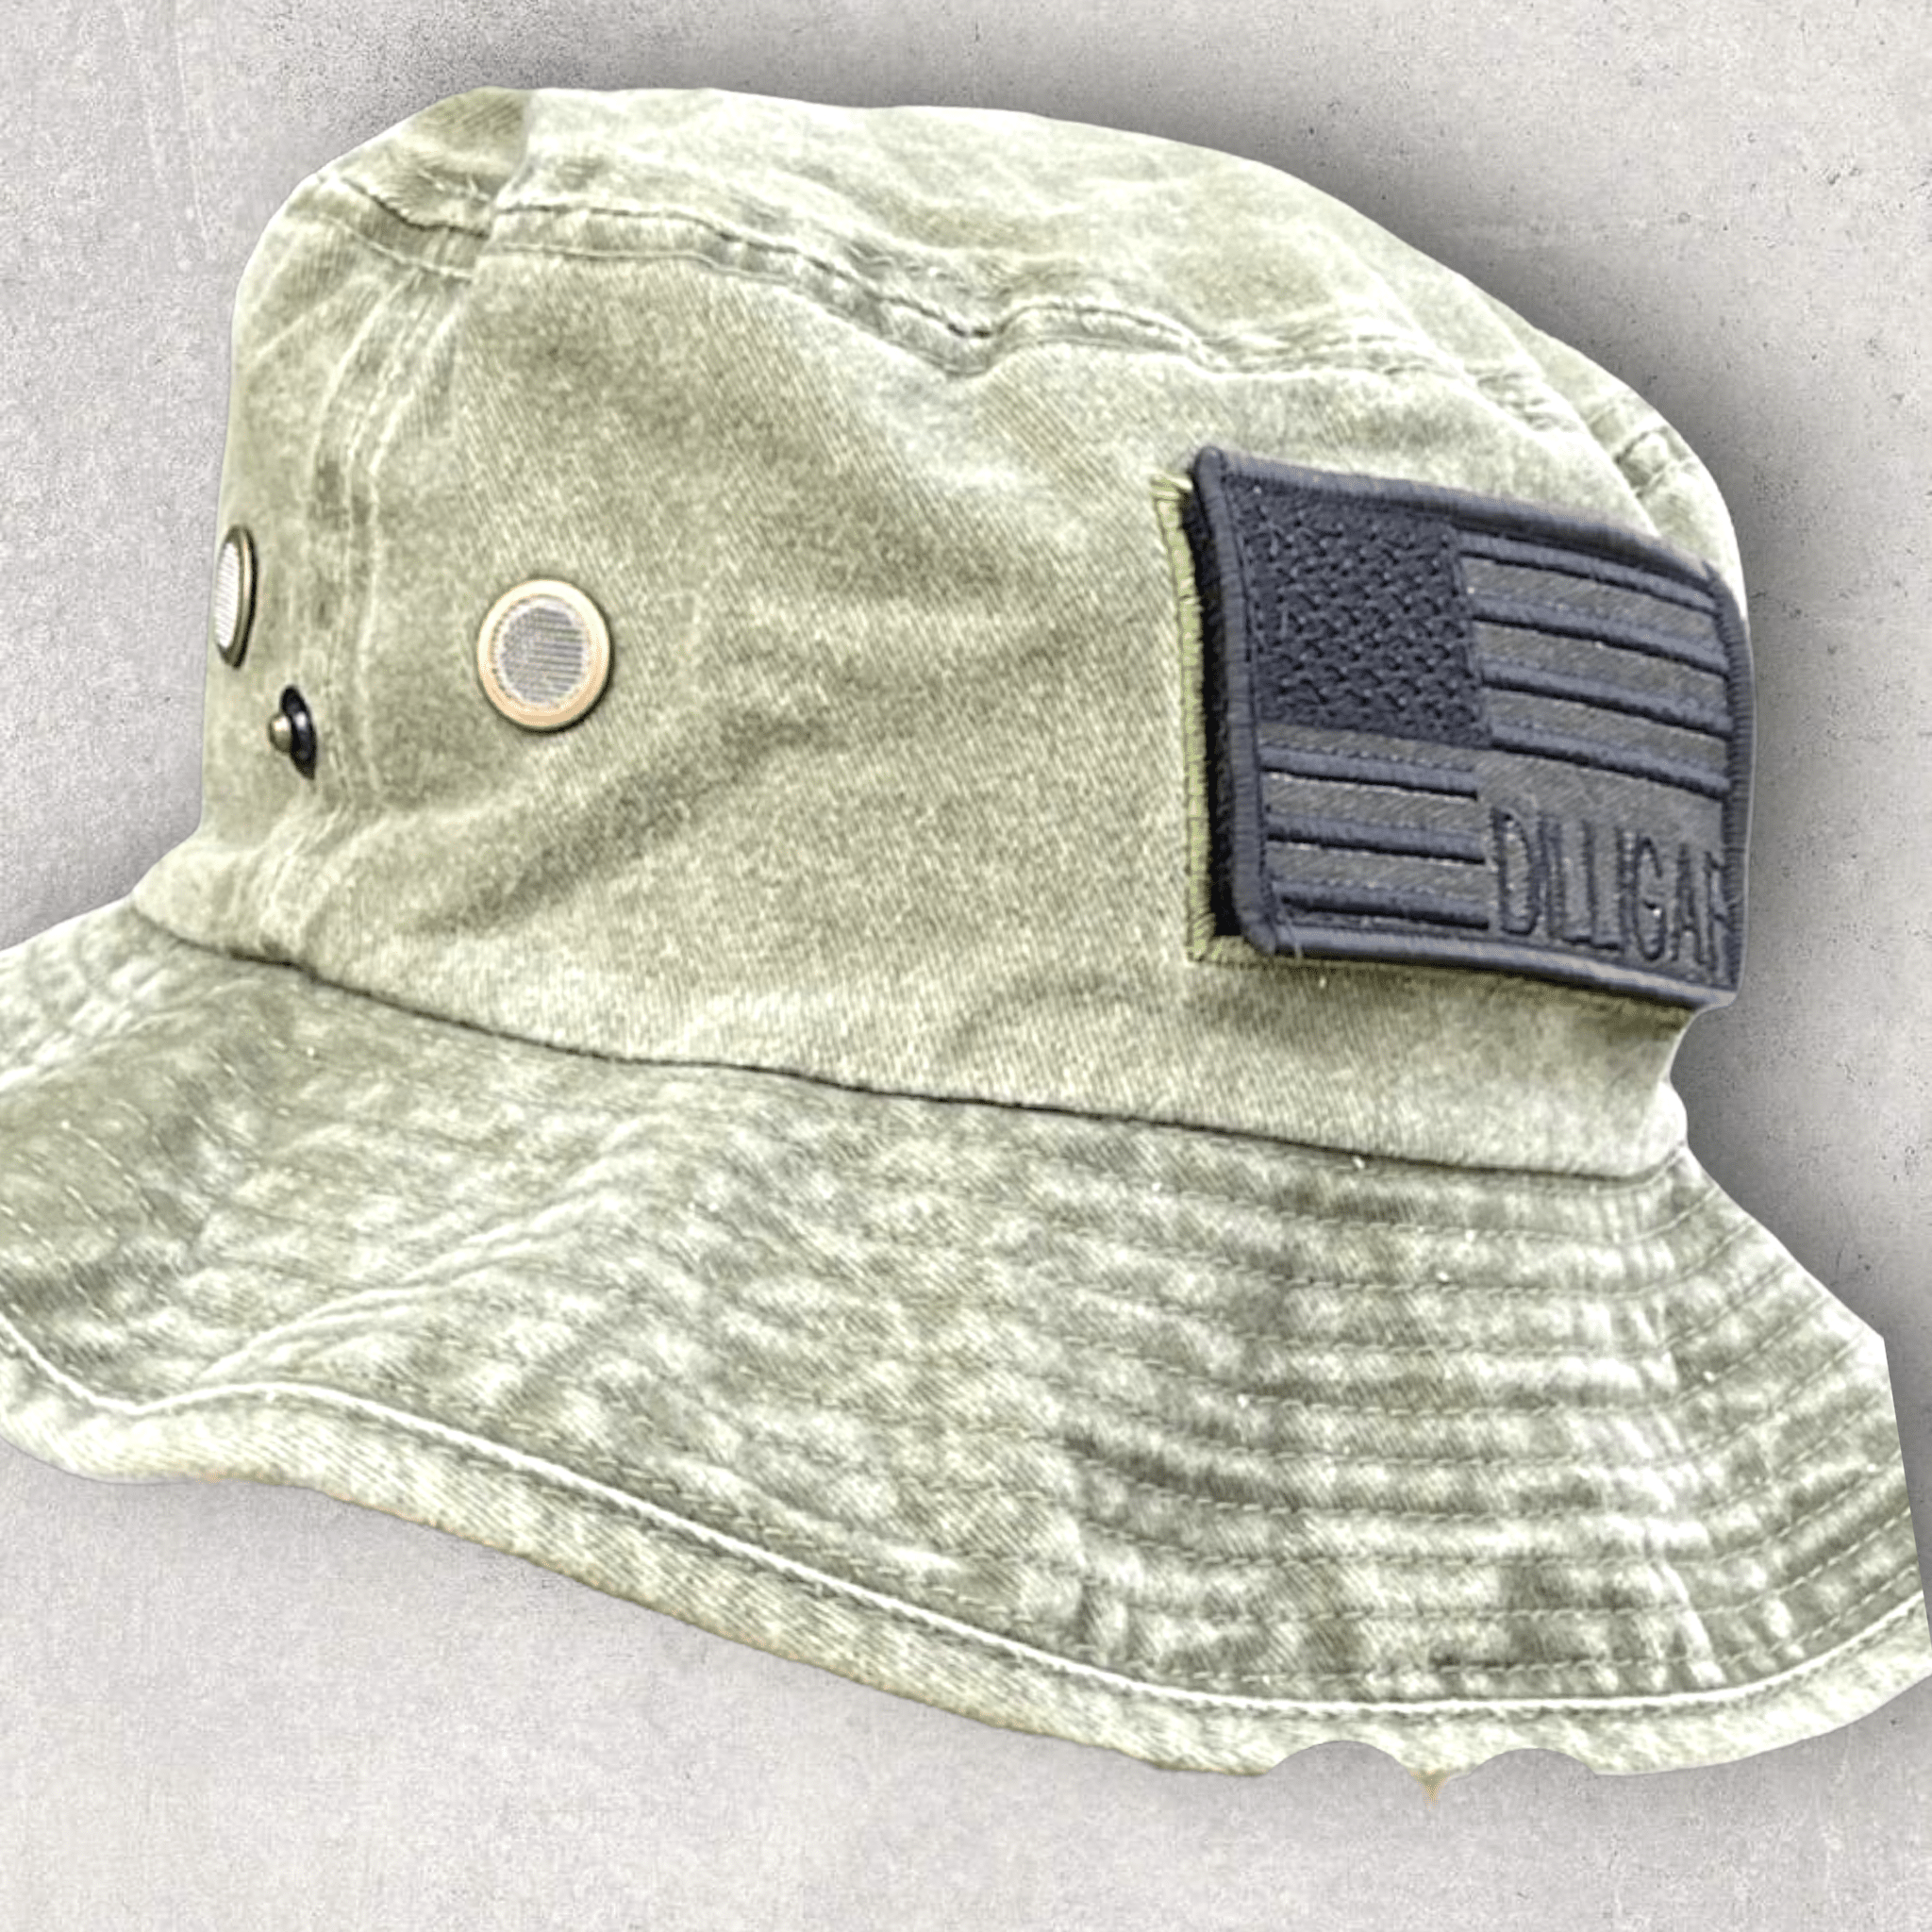 Olive Patriotic Dilligaf Bucket Hat